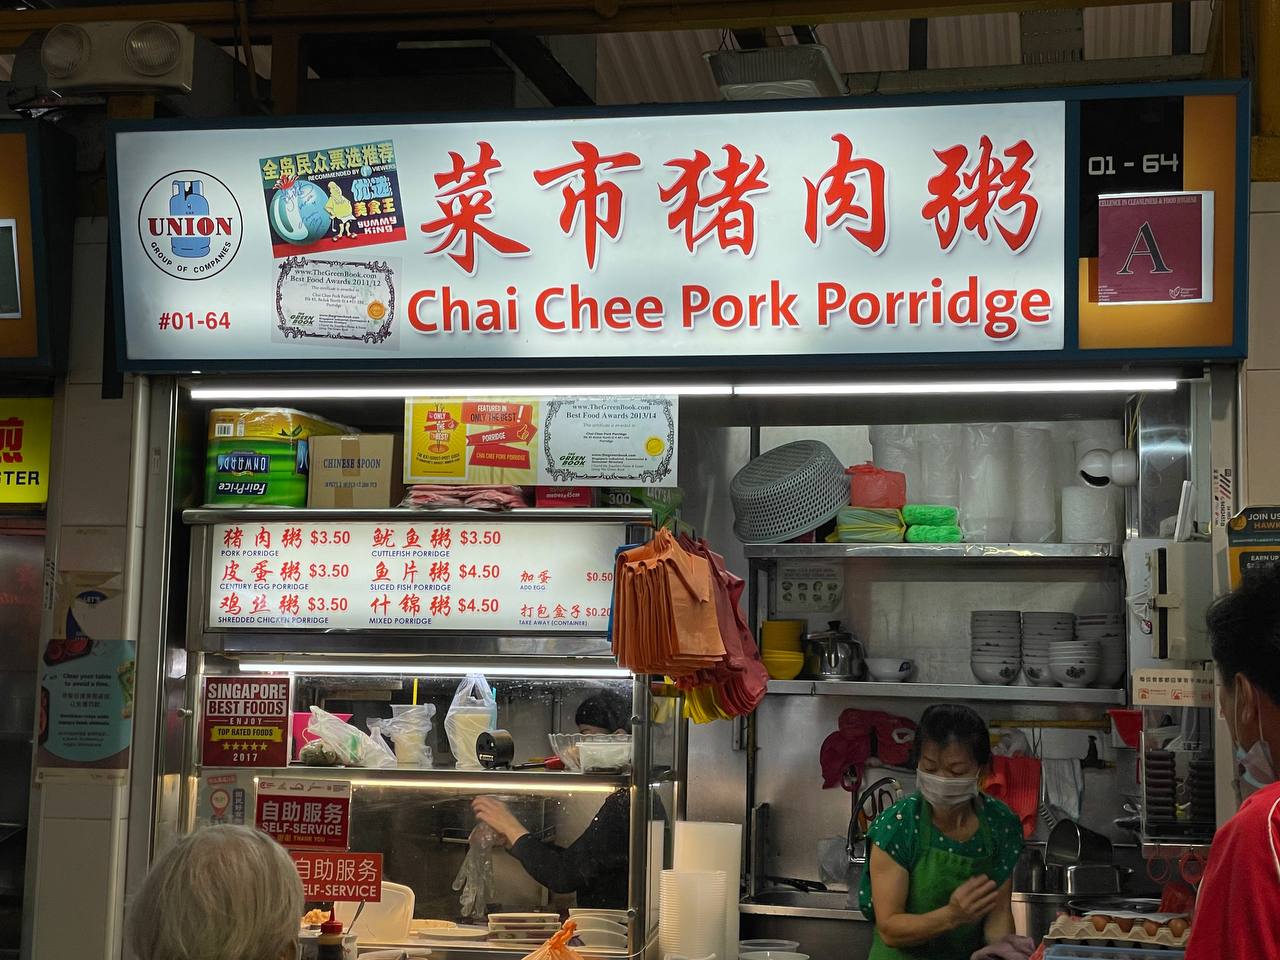 Bedok 85 - Chai Chee pork porridge